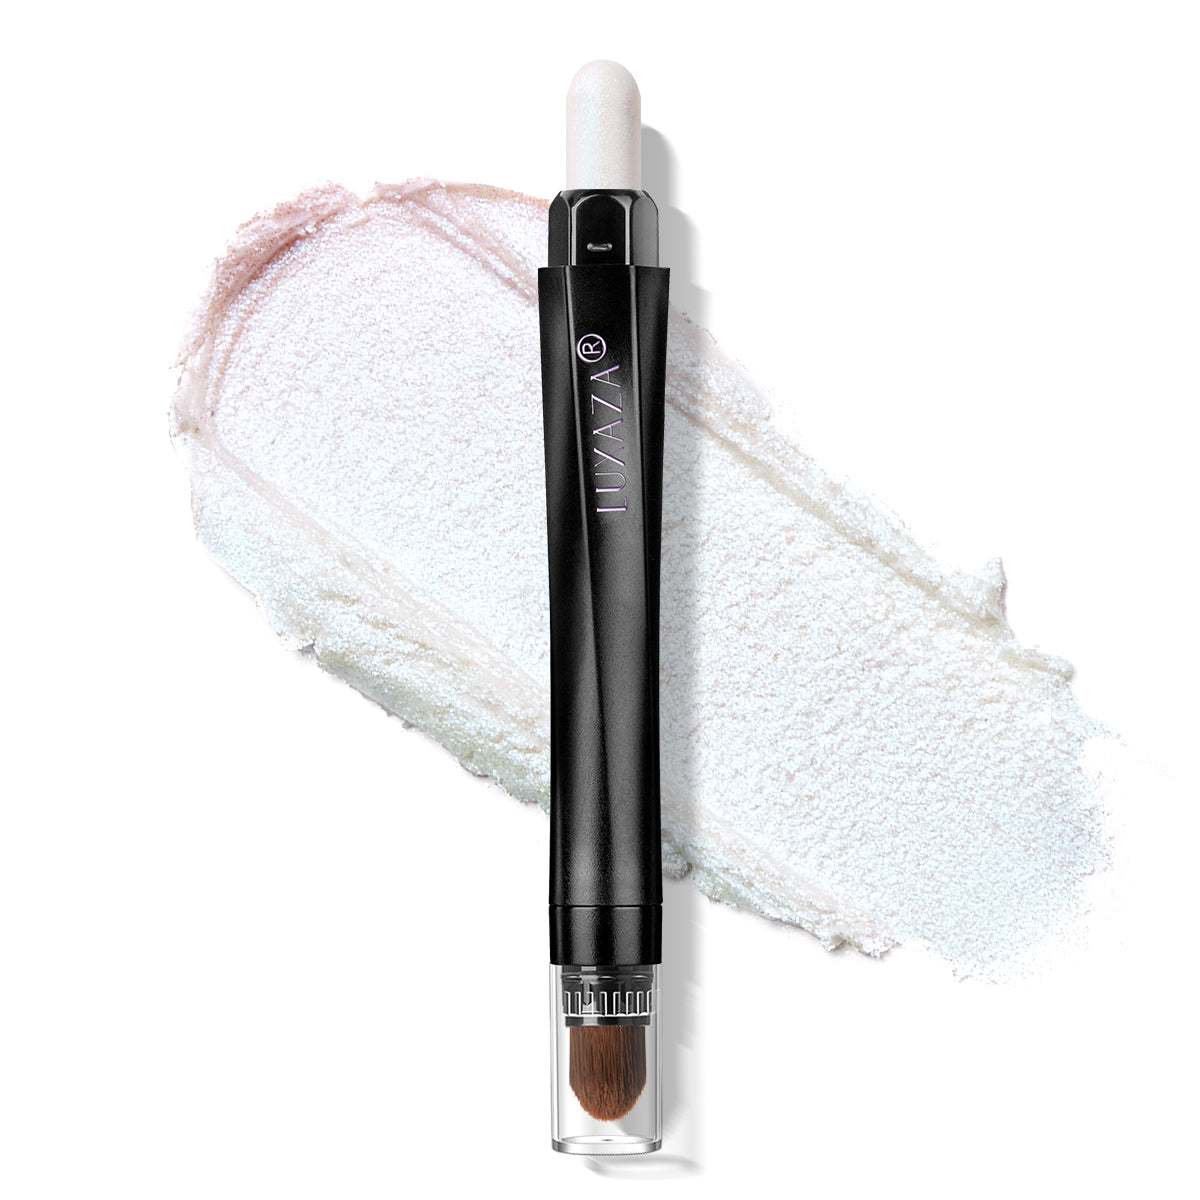 Luxaza - Multichrome Eyeshadow Stick #202 - Star White